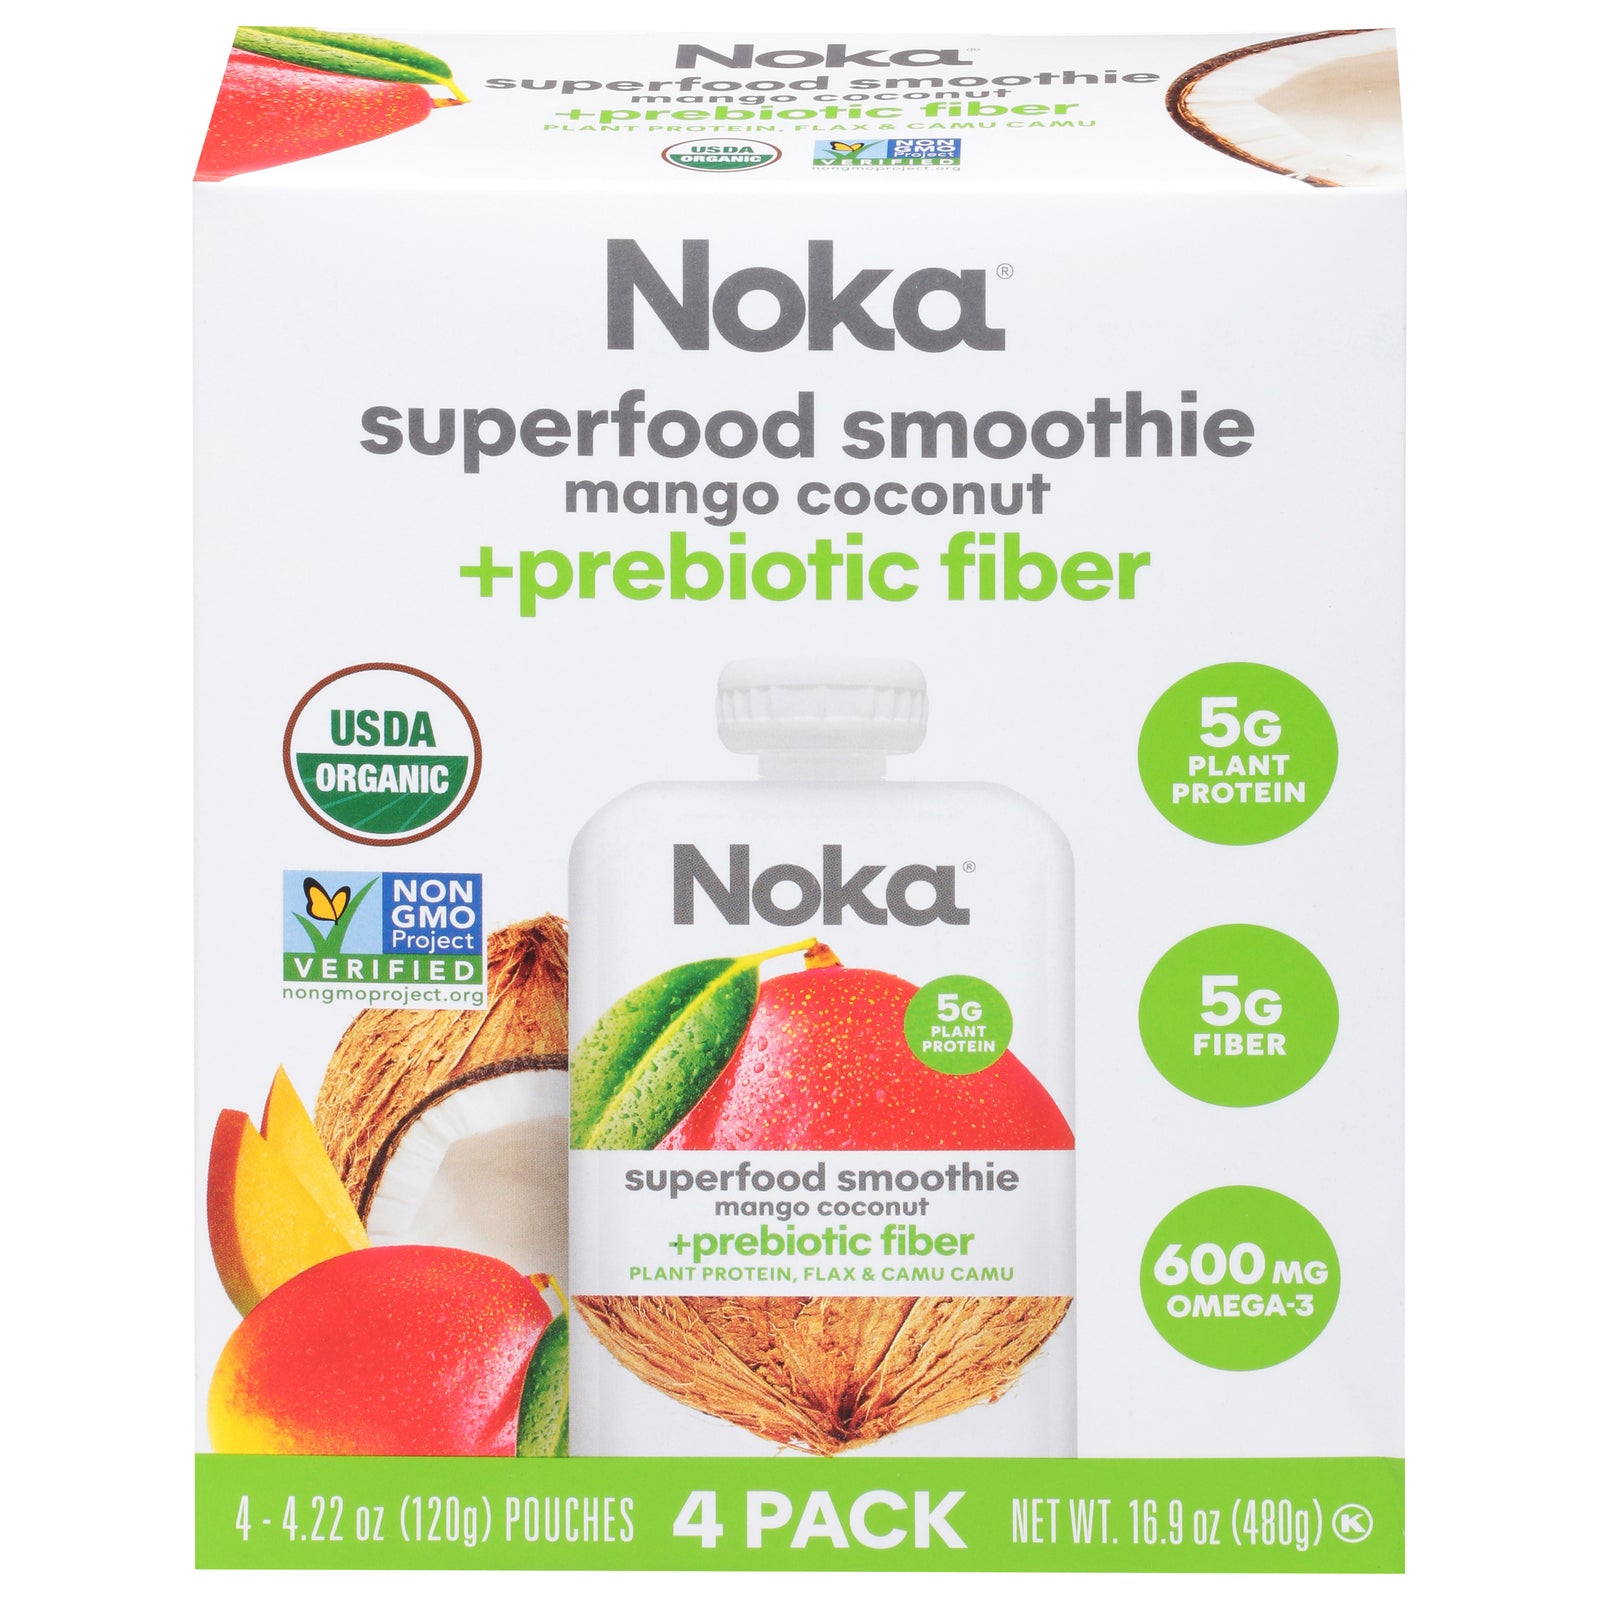 Noka - Sprfd Smthe Mgo Coconut - Case of 6-4 PACK